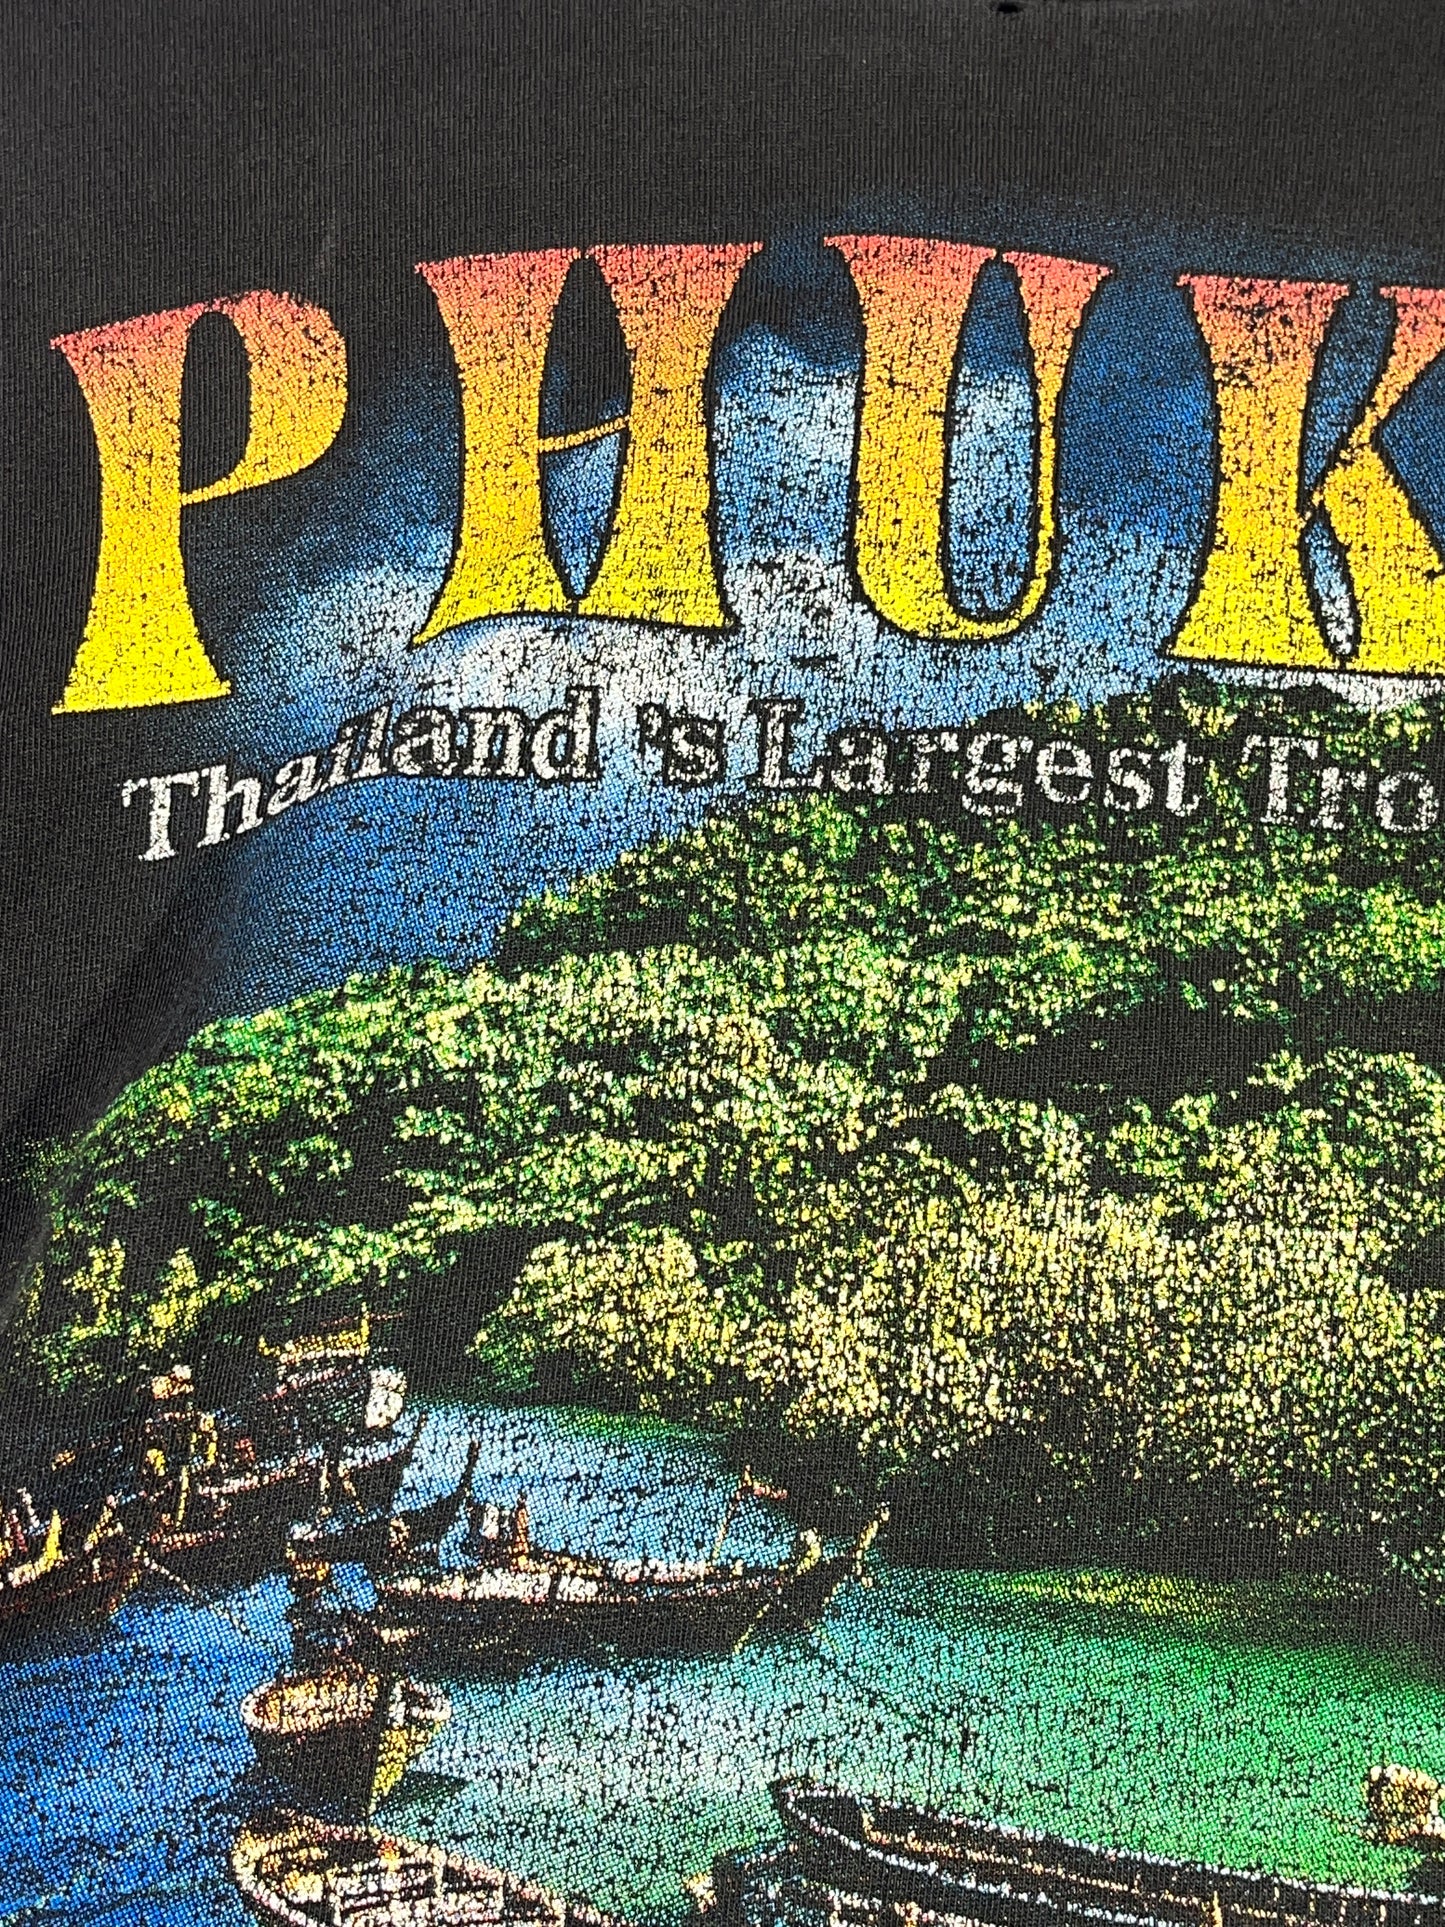 Vintage Phuket T-Shirt Thailand Soft Distressed Patong Beach